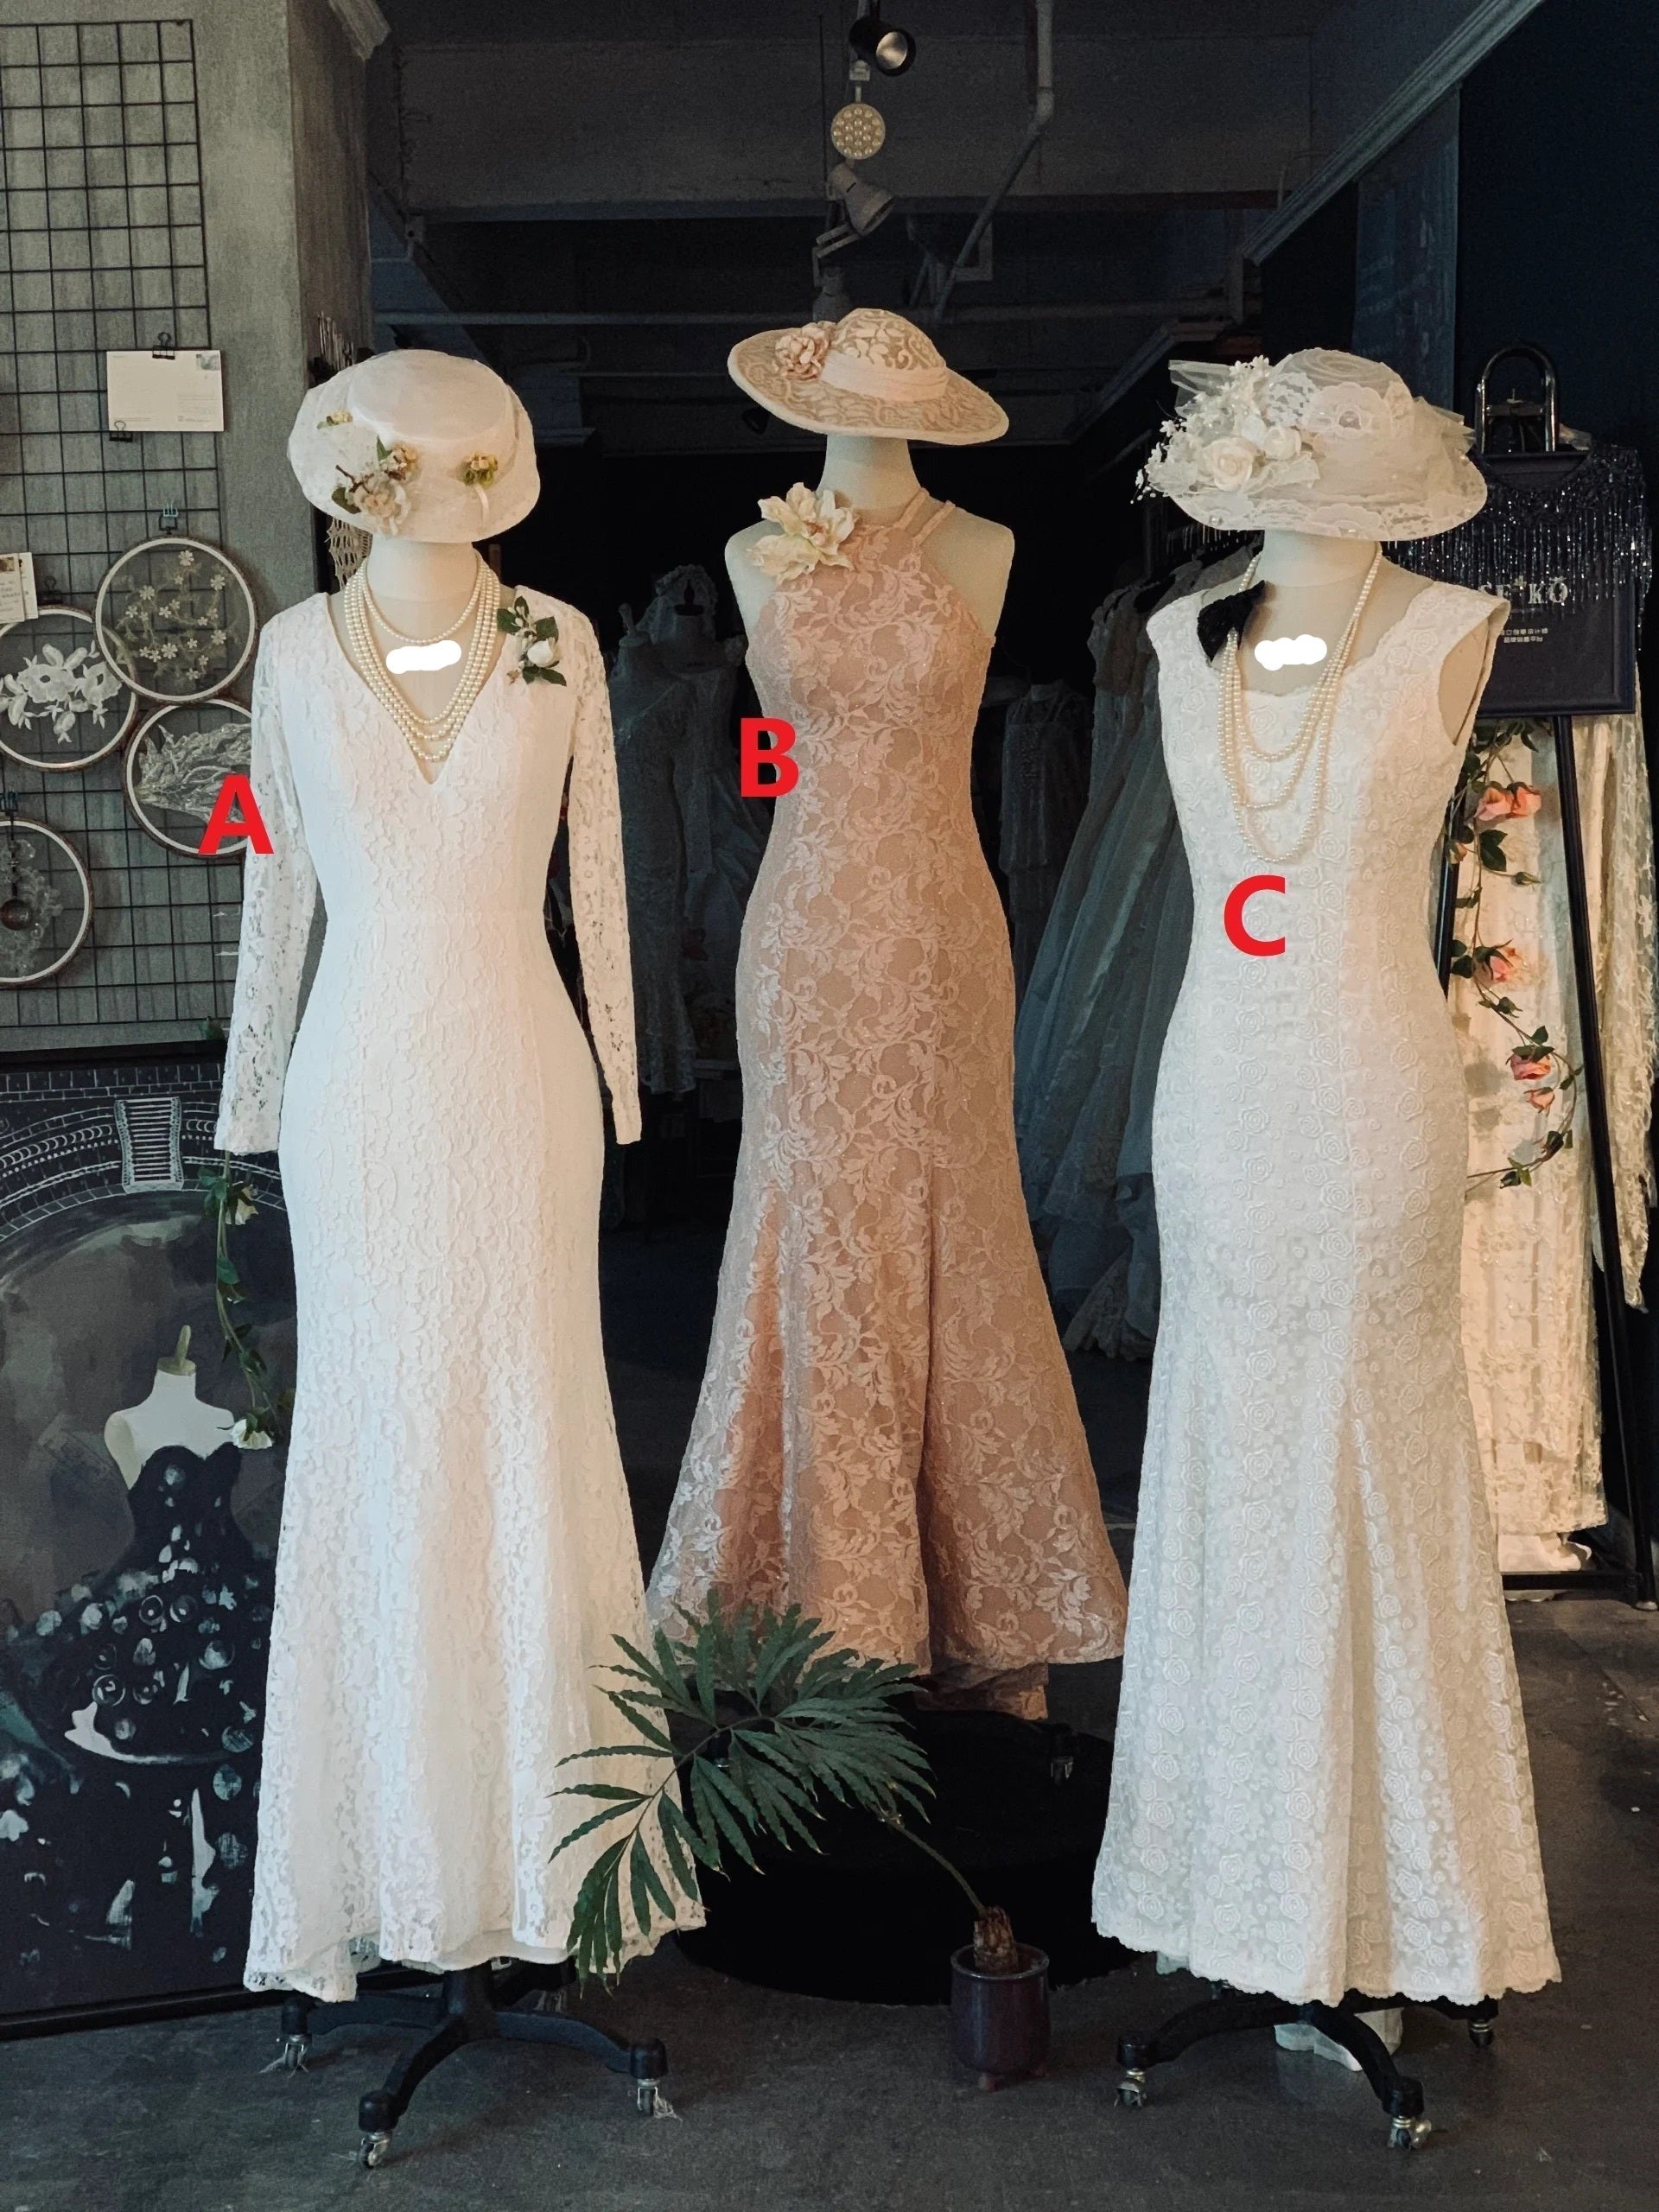 Classic Vintage Lace Floor Length Mermaid Corset Wedding Dress outfit, Wedding Dress Boho